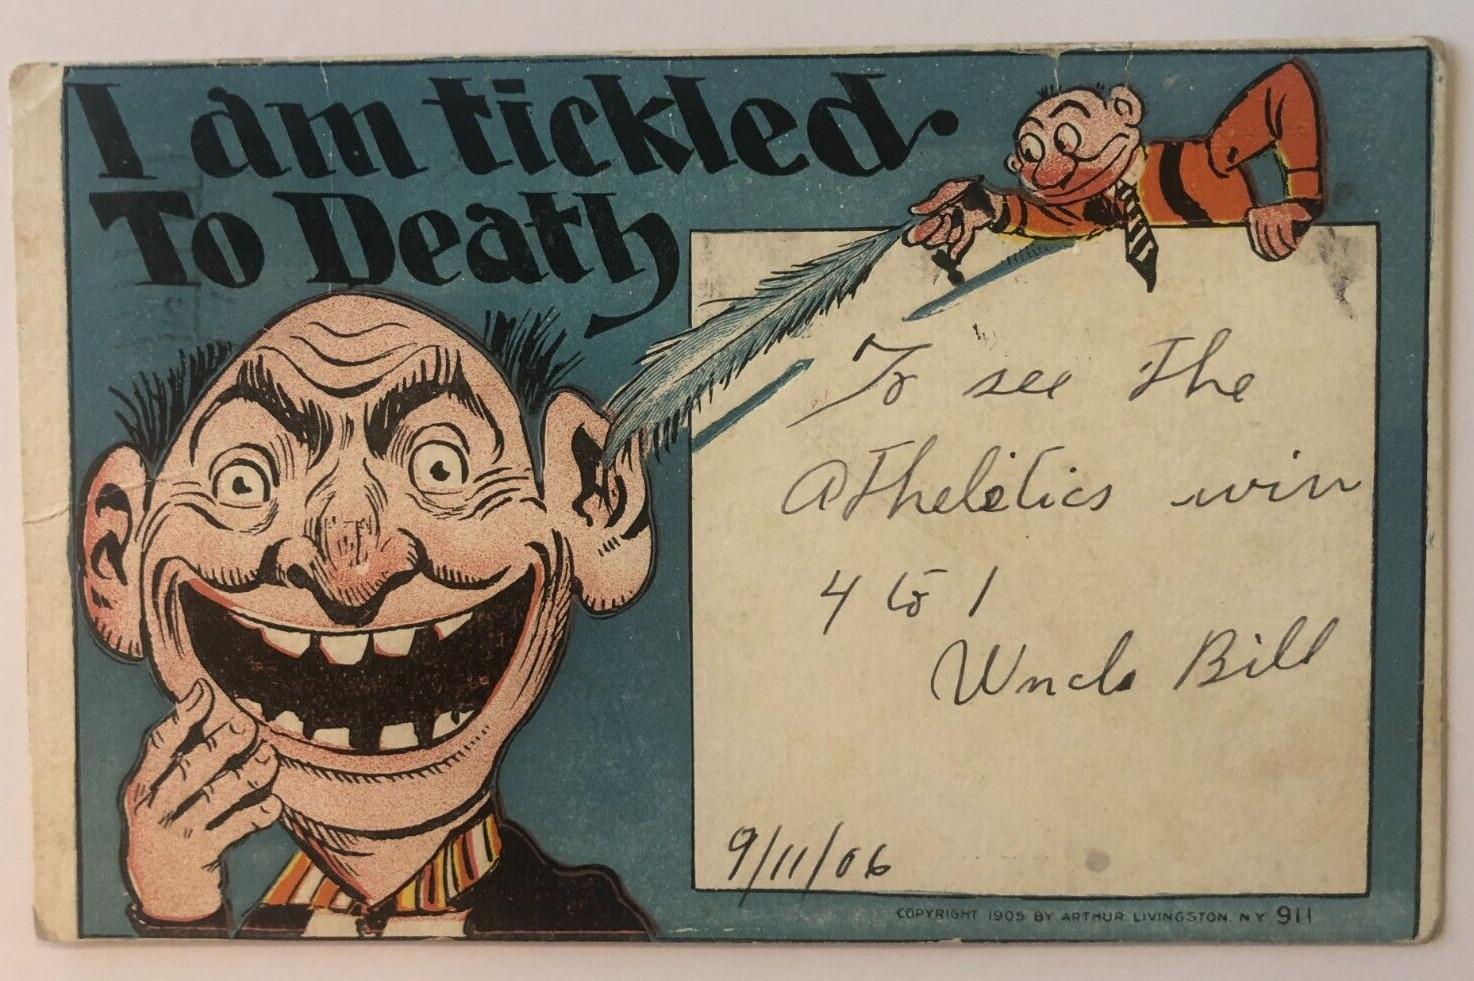 I am tickled to death, Humor, Arthur Livingston Postcard 911, c1905, Post 1906